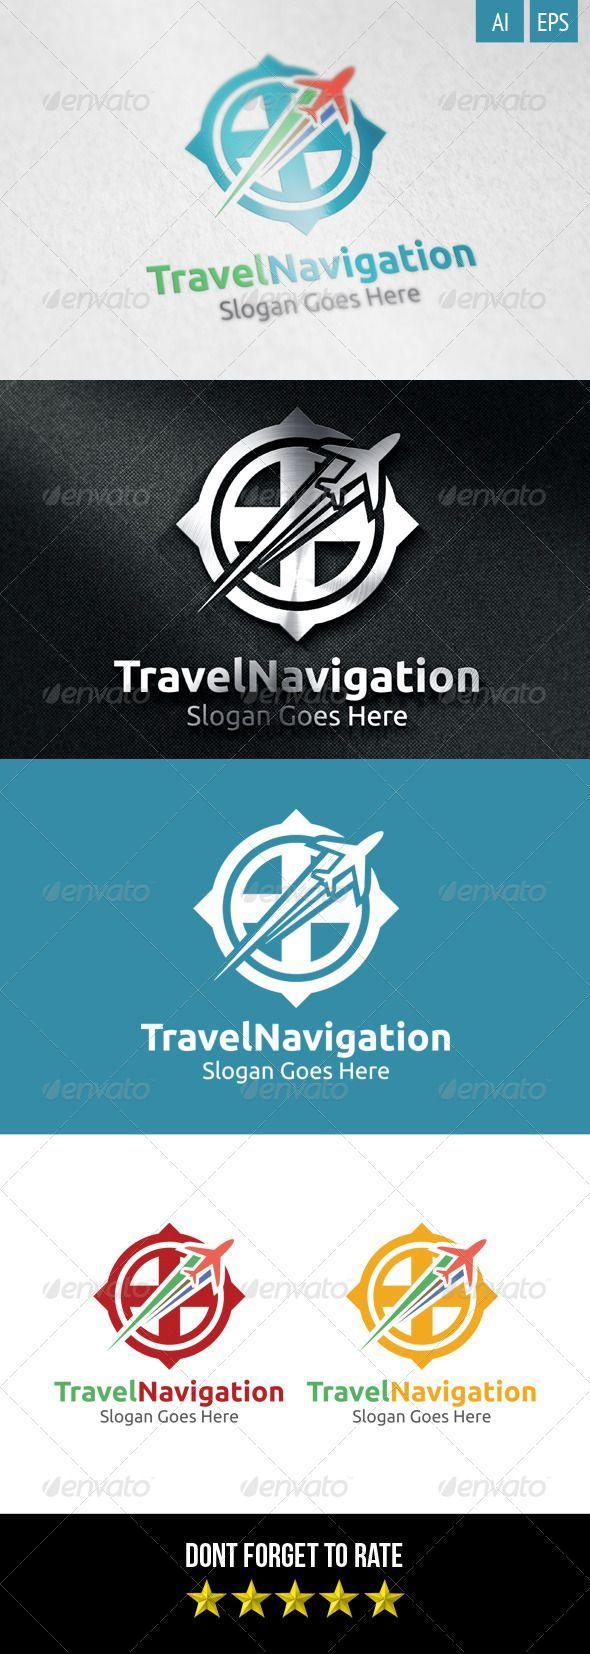 Navigation Logo - Travel Navigation Logo. Logos, Vector format and Logo